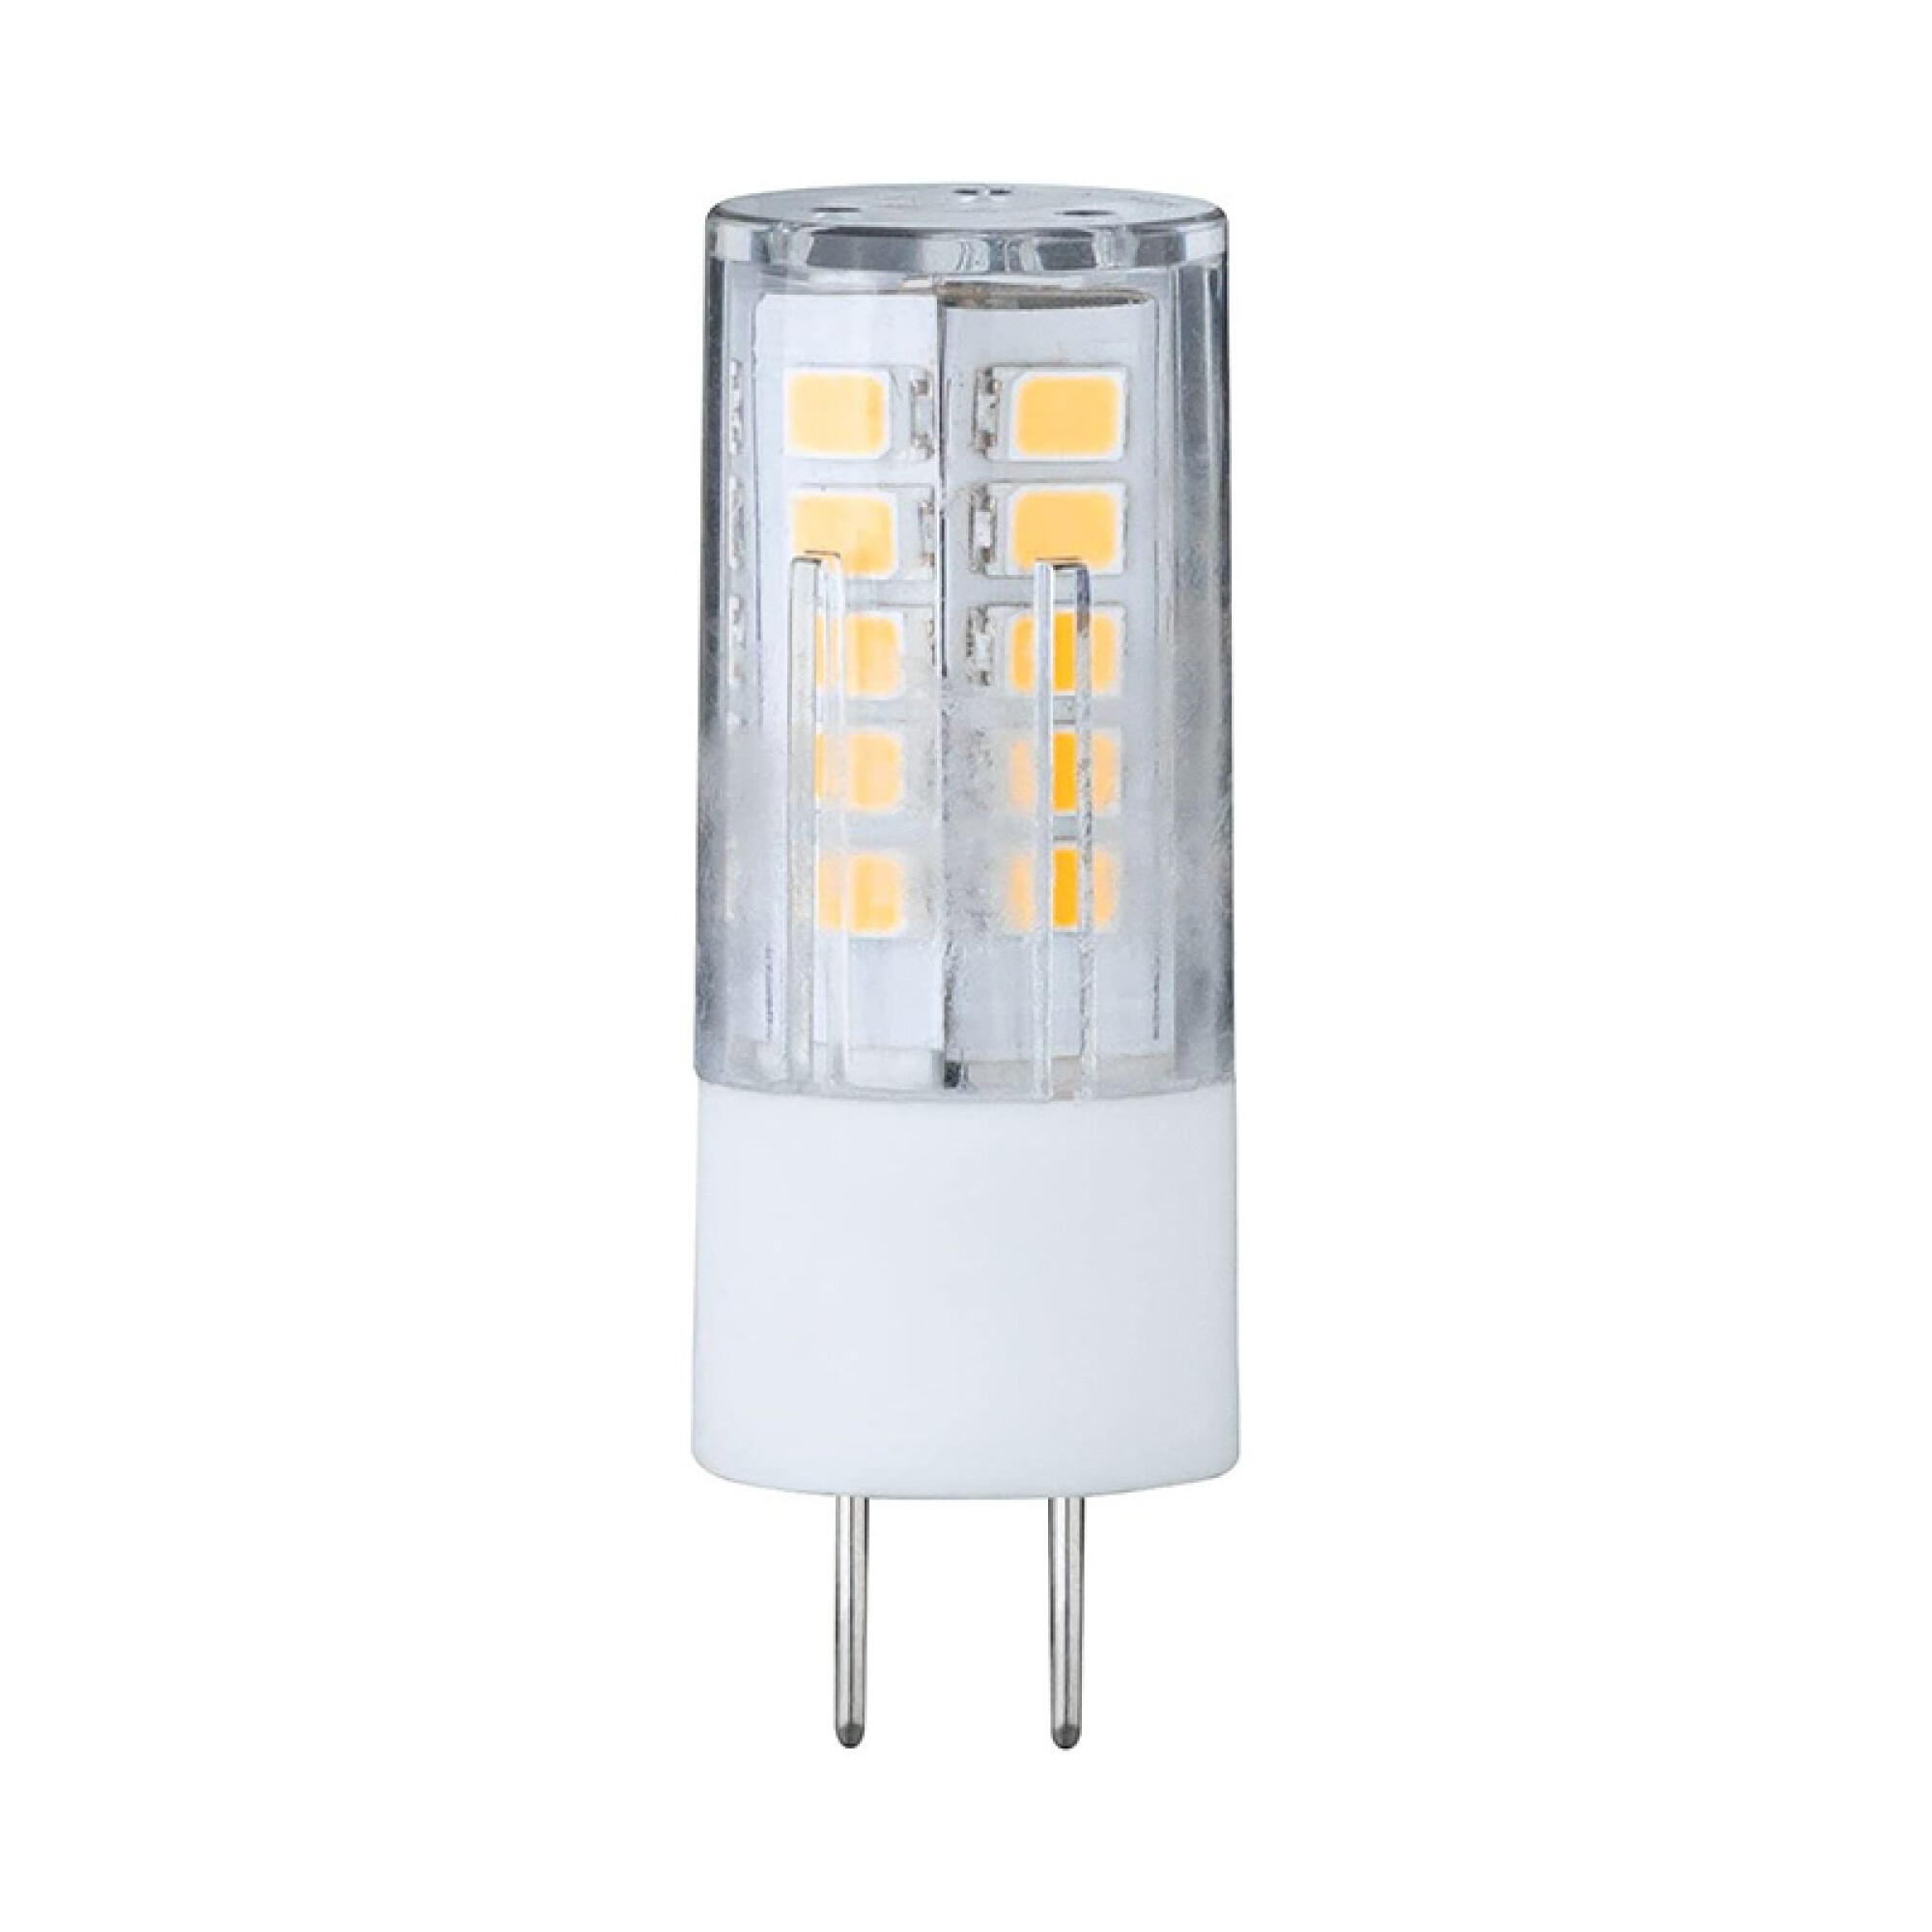 Bombilla LED G4 2W 200 lm 2700K intensidad de luz regulable